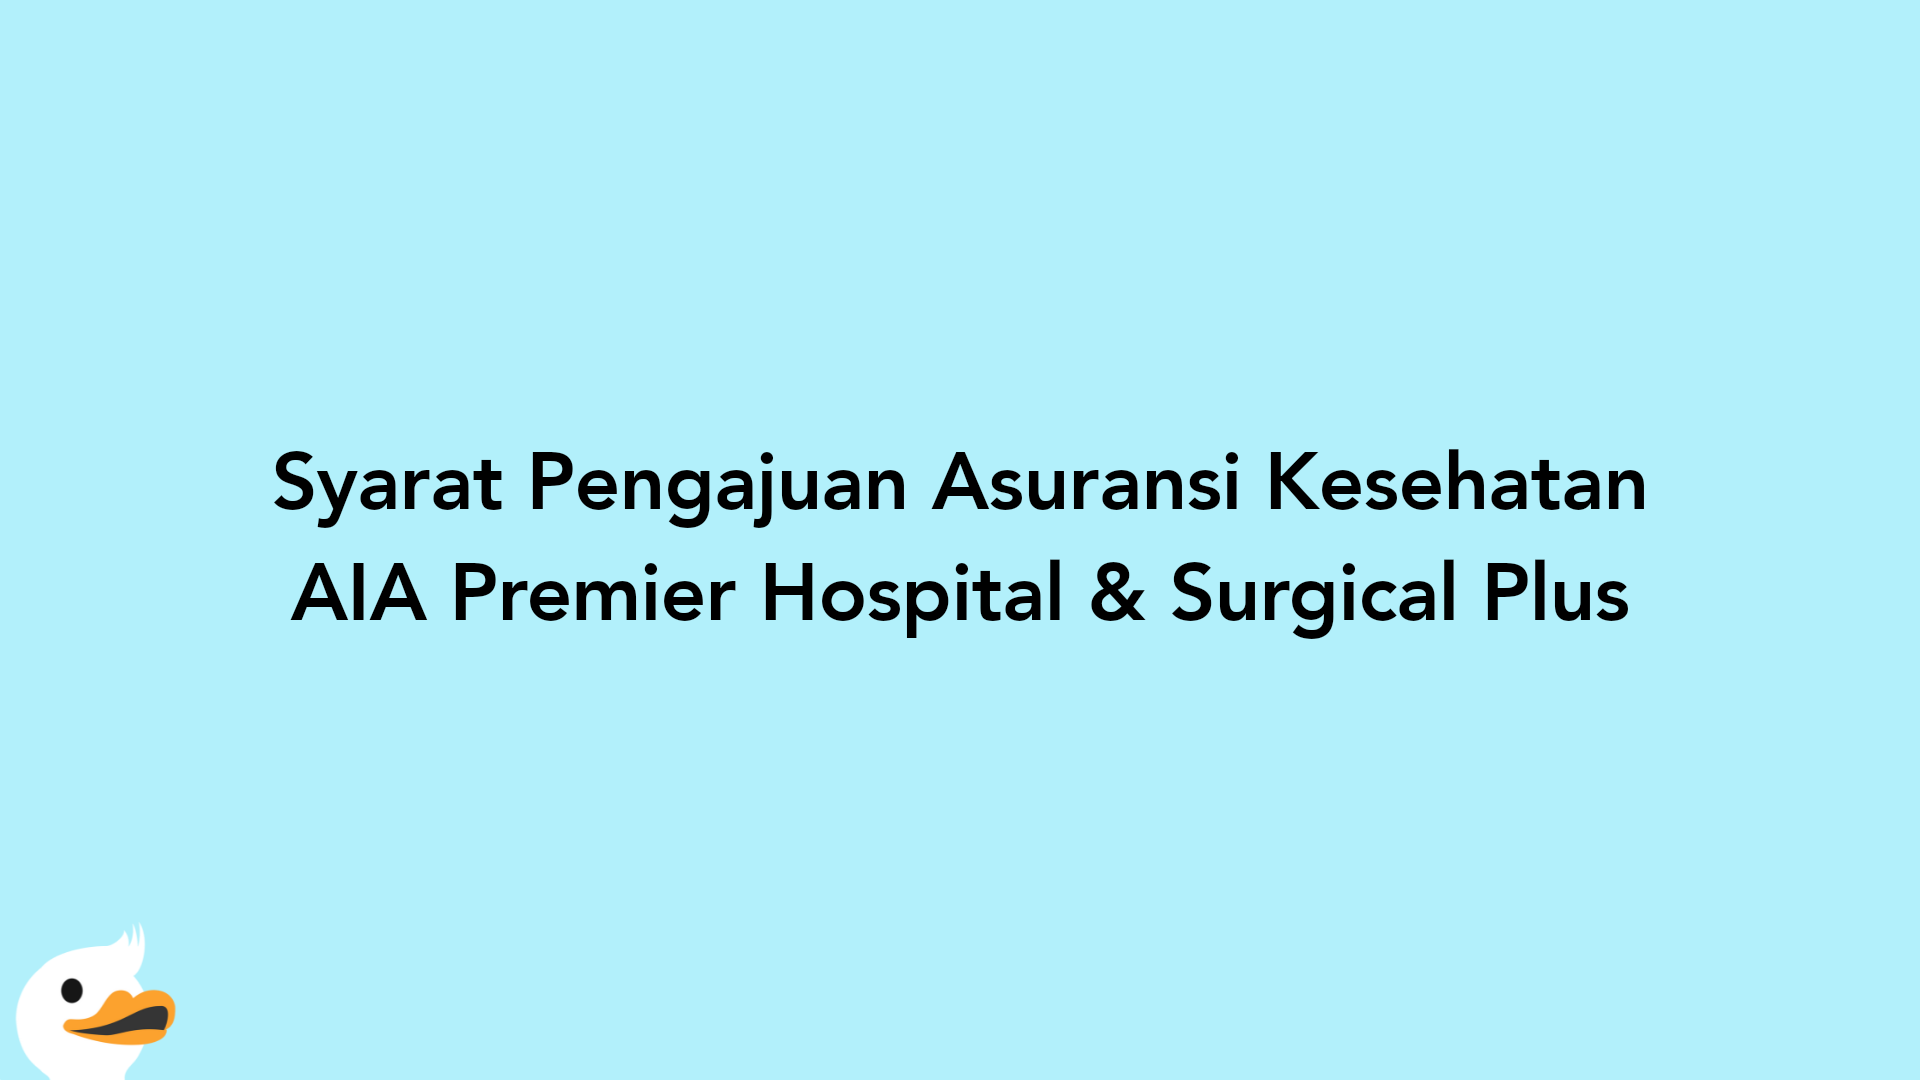 Syarat Pengajuan Asuransi Kesehatan AIA Premier Hospital & Surgical Plus